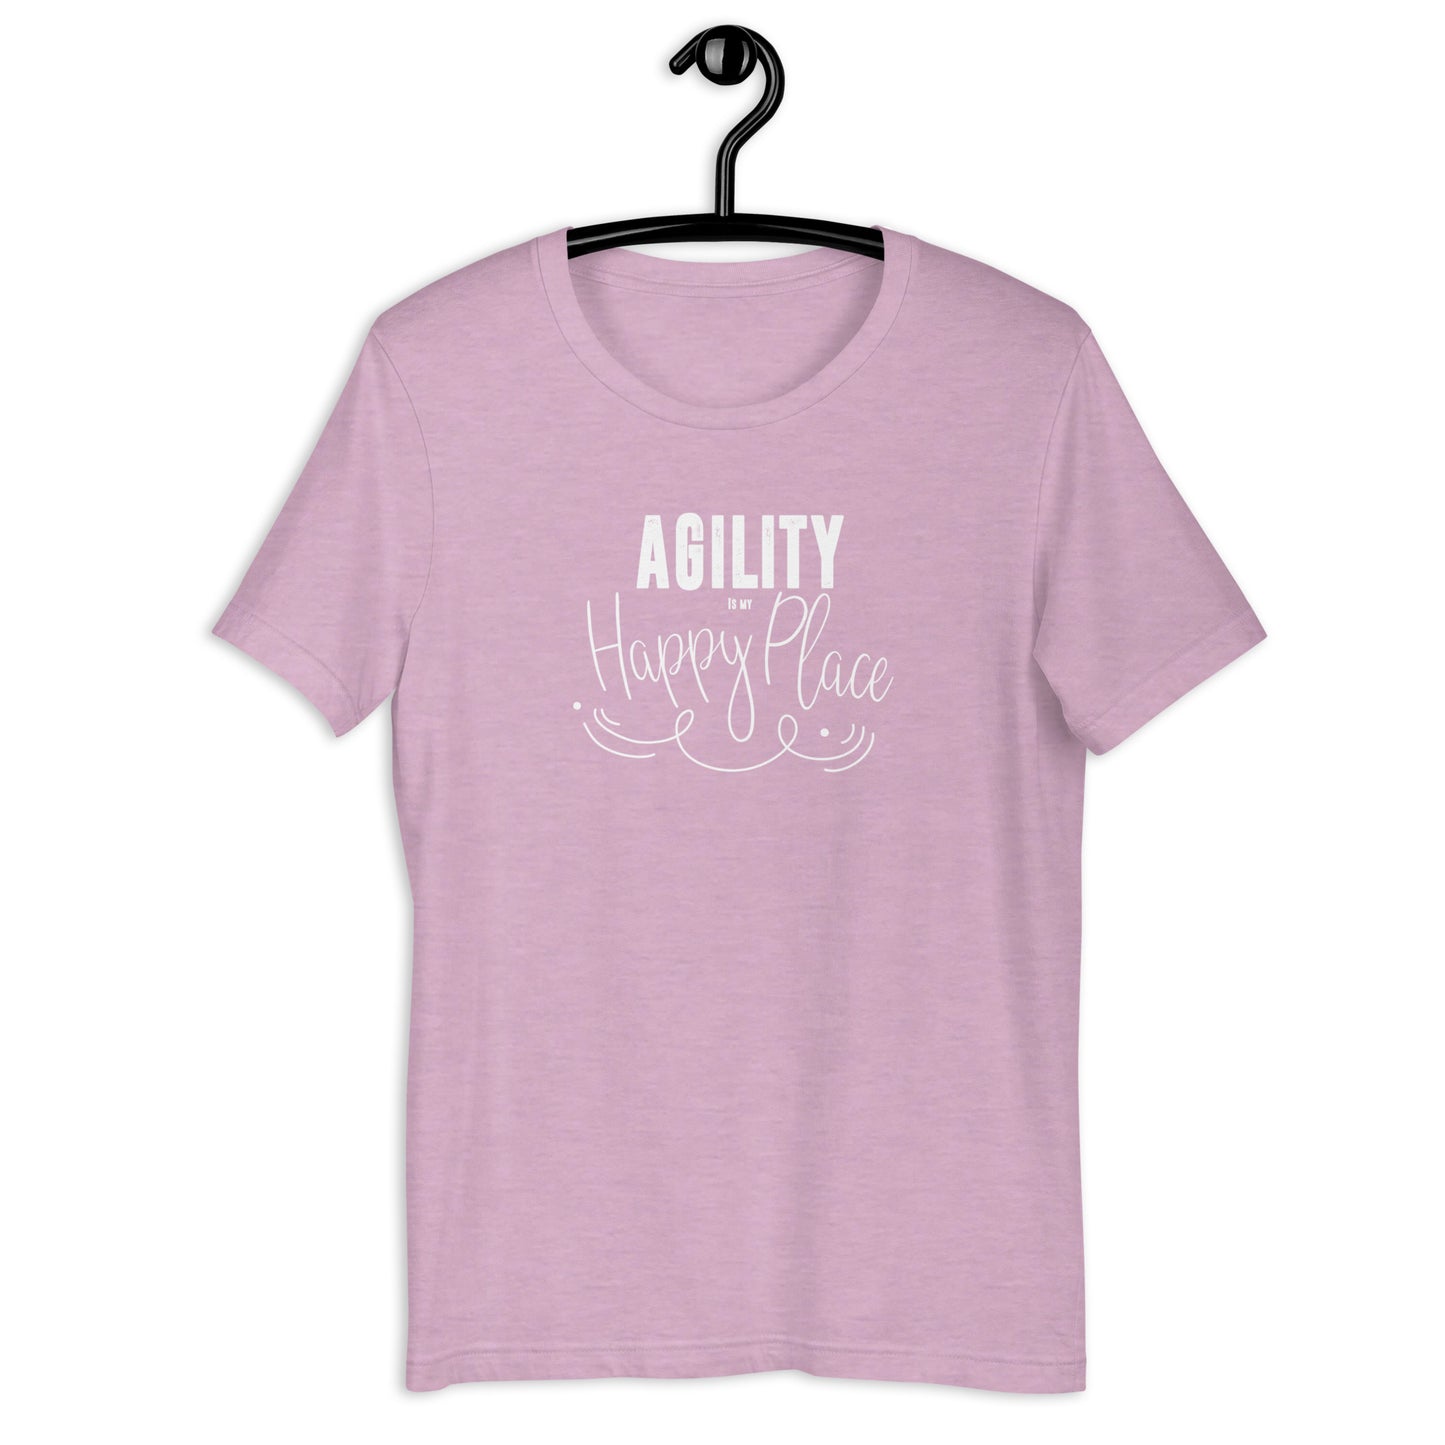 AGILITY HAPPY PLACE - Unisex t-shirt